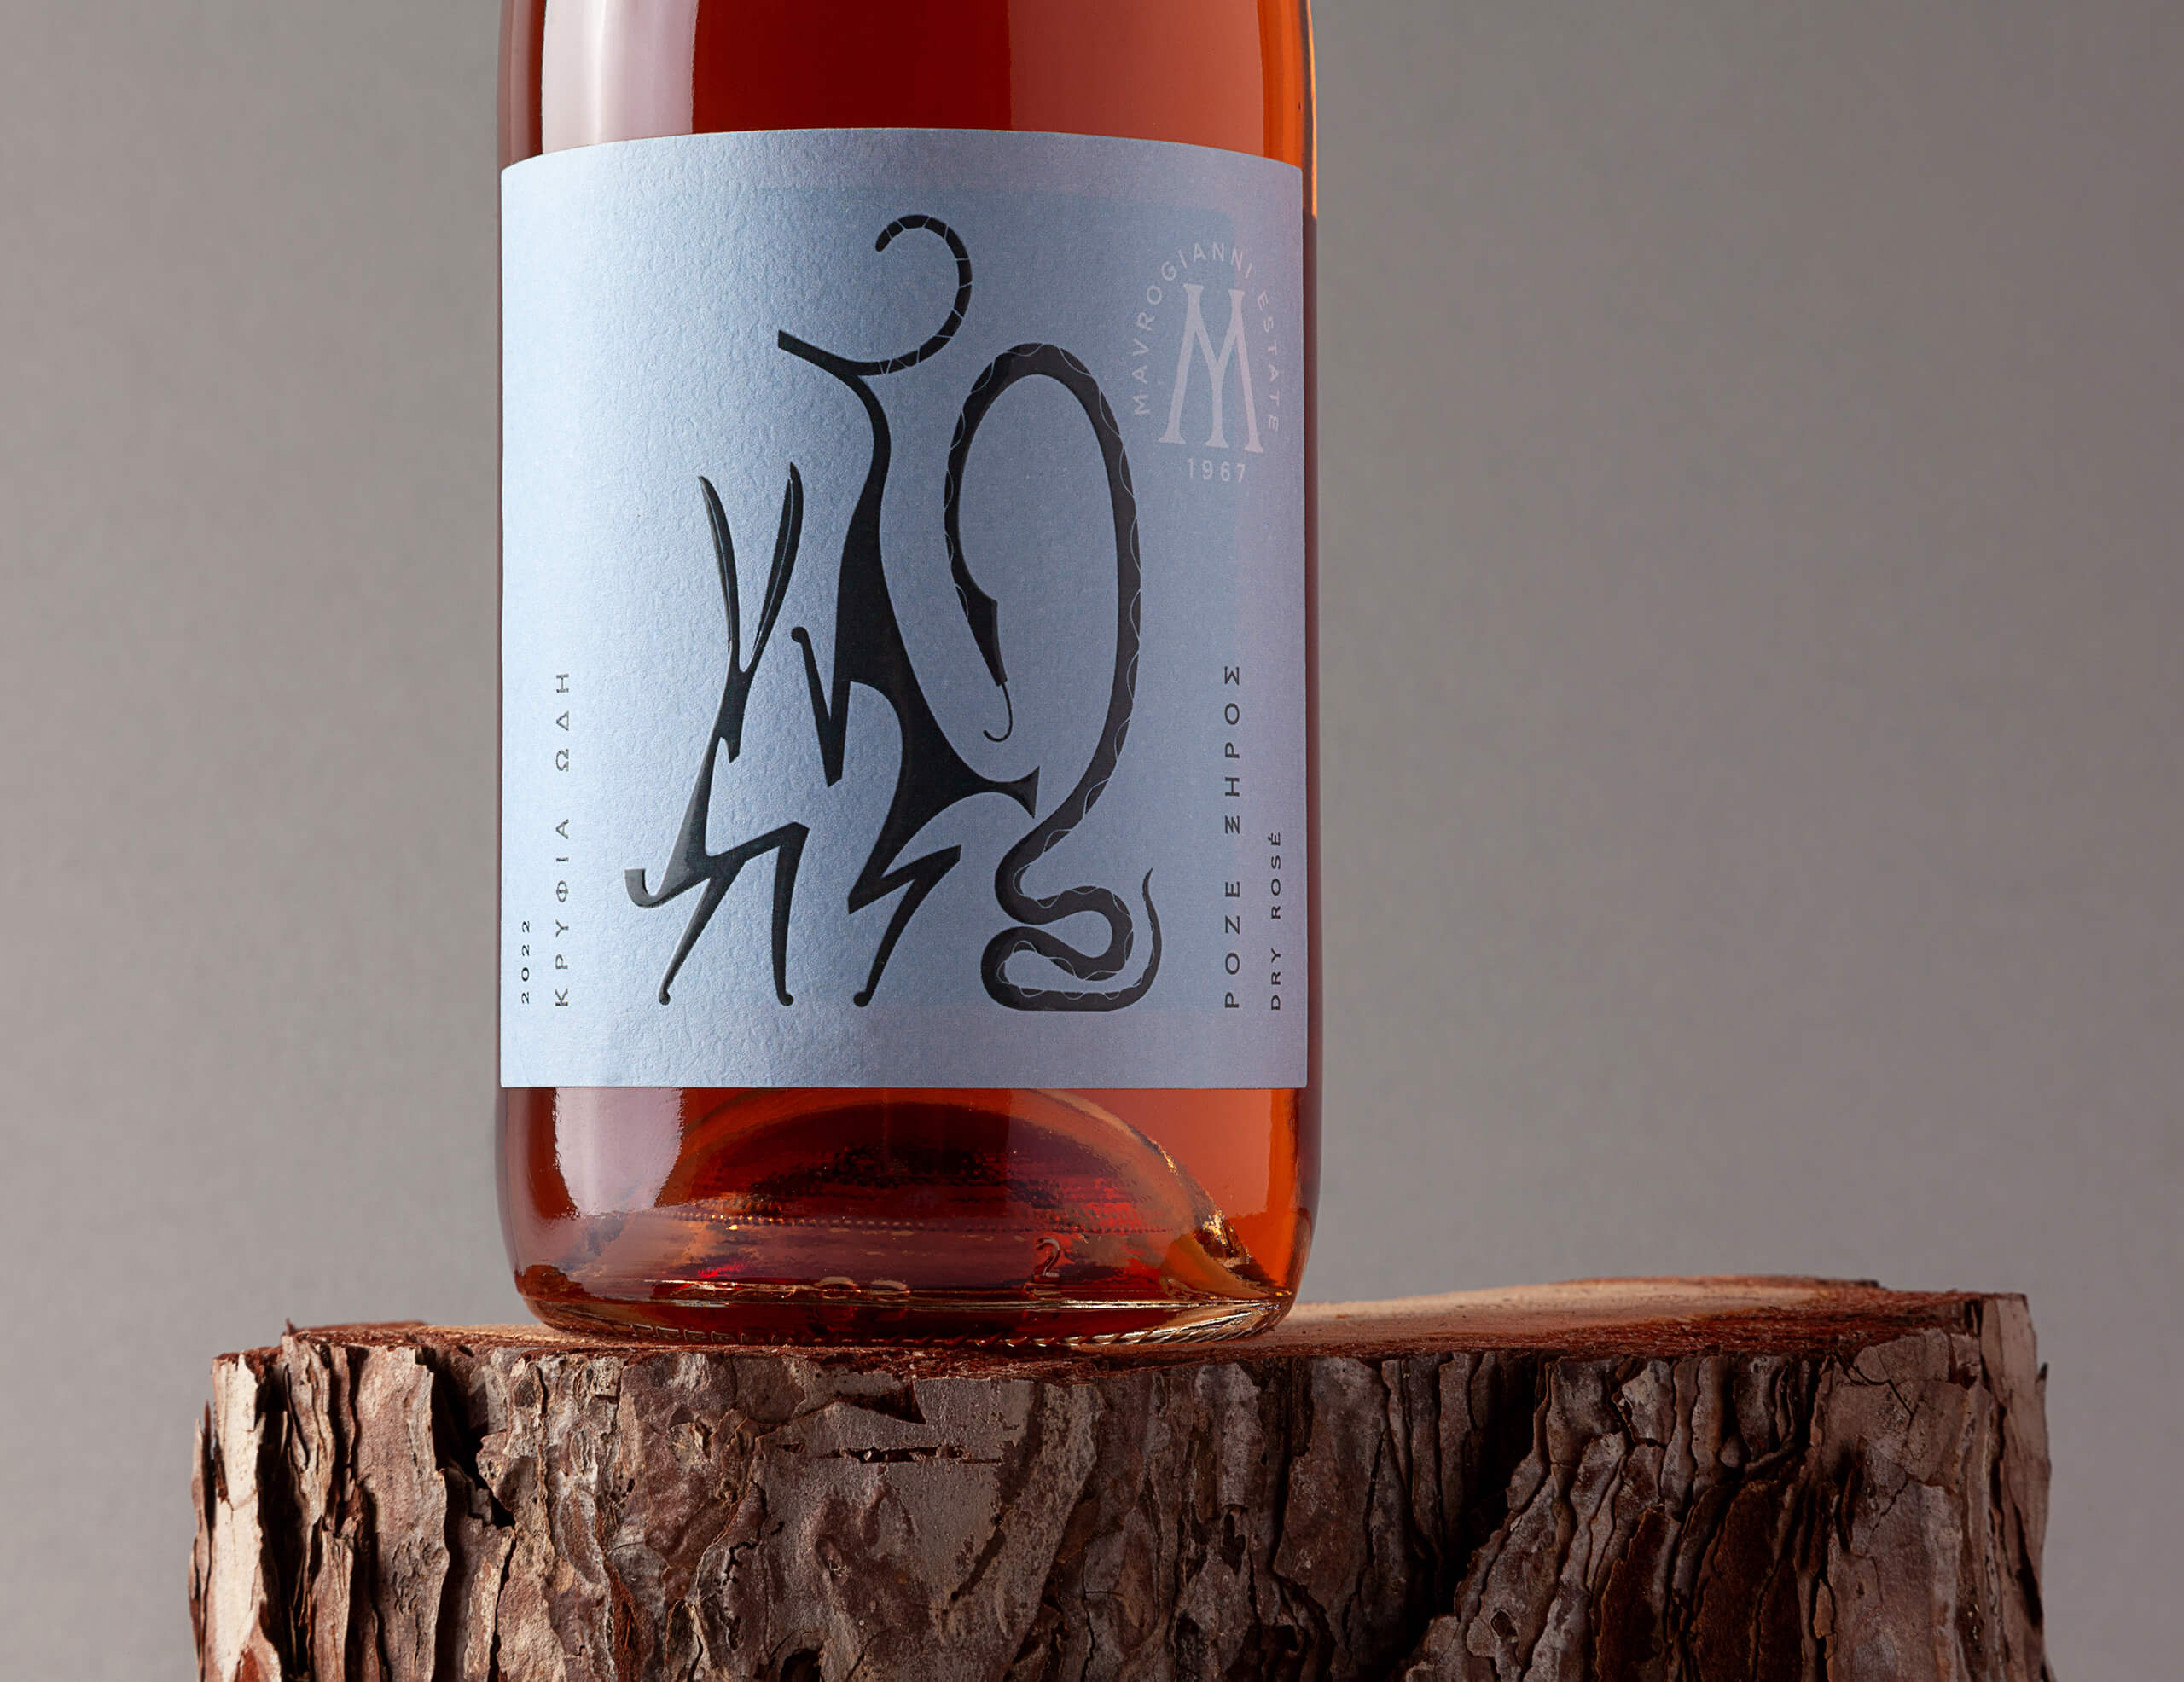 Symbolic-Mavrogianni wine packaging design